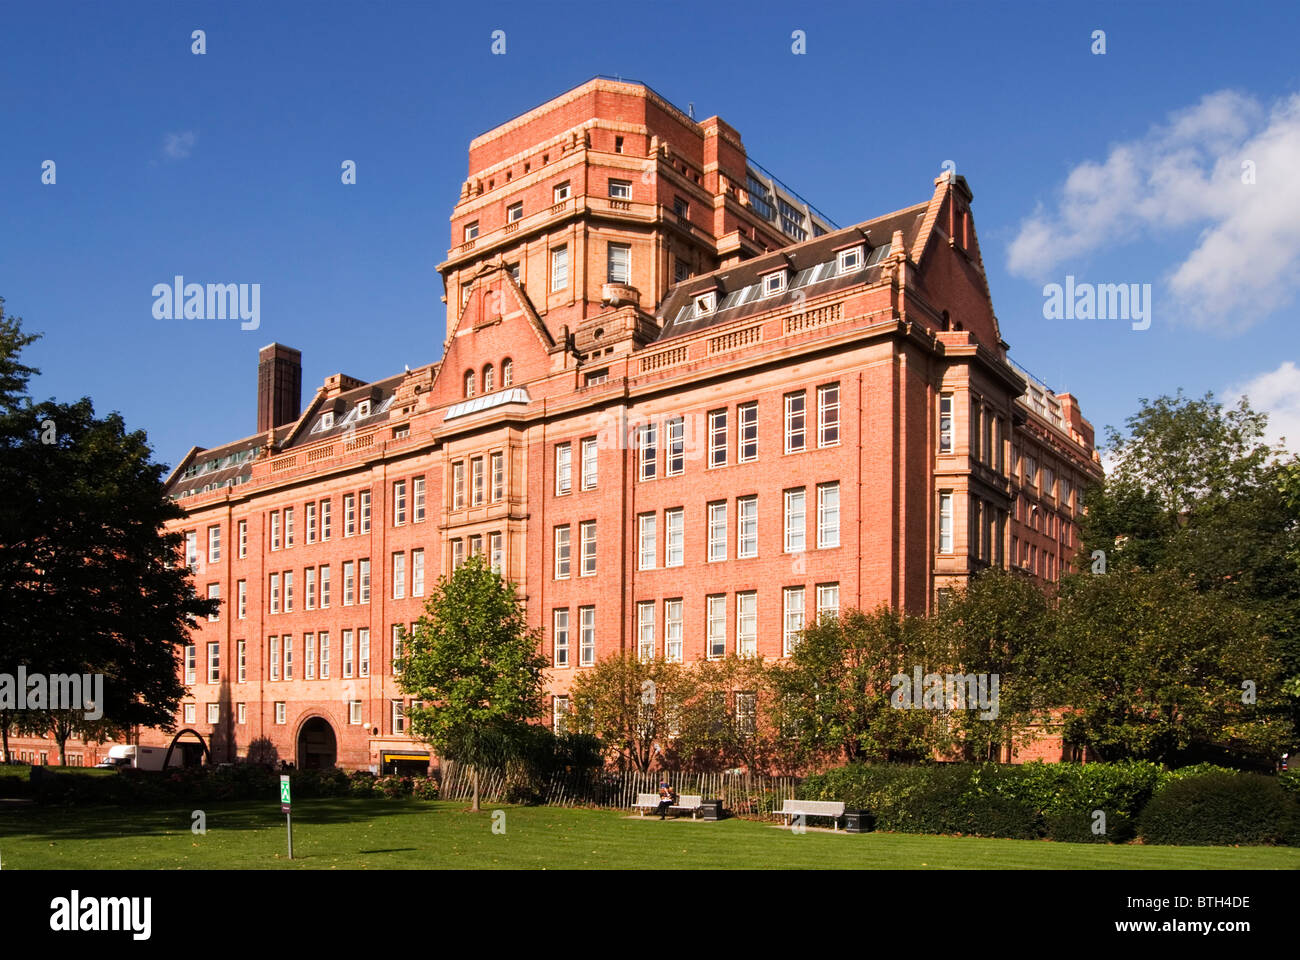 Renold building, University of Manchester, England, UK Stock Photo